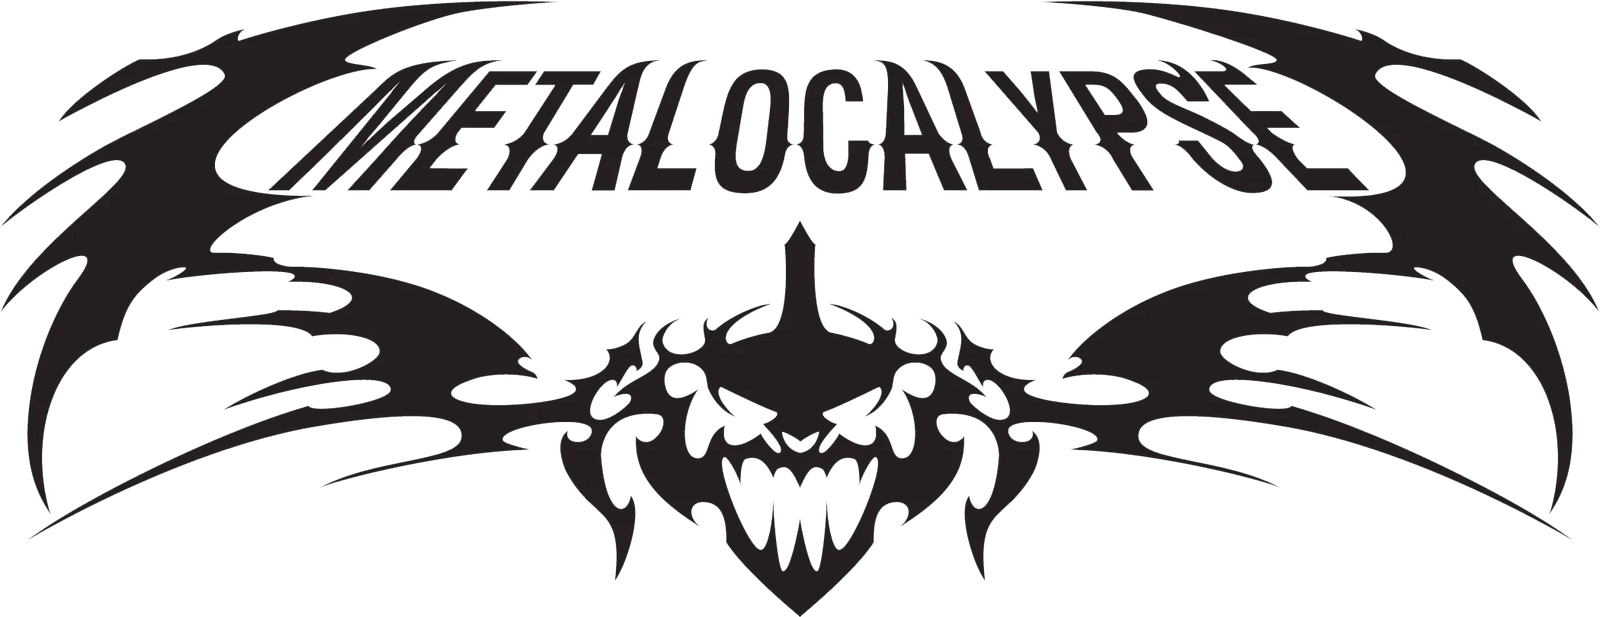 Metalocalypse logo.